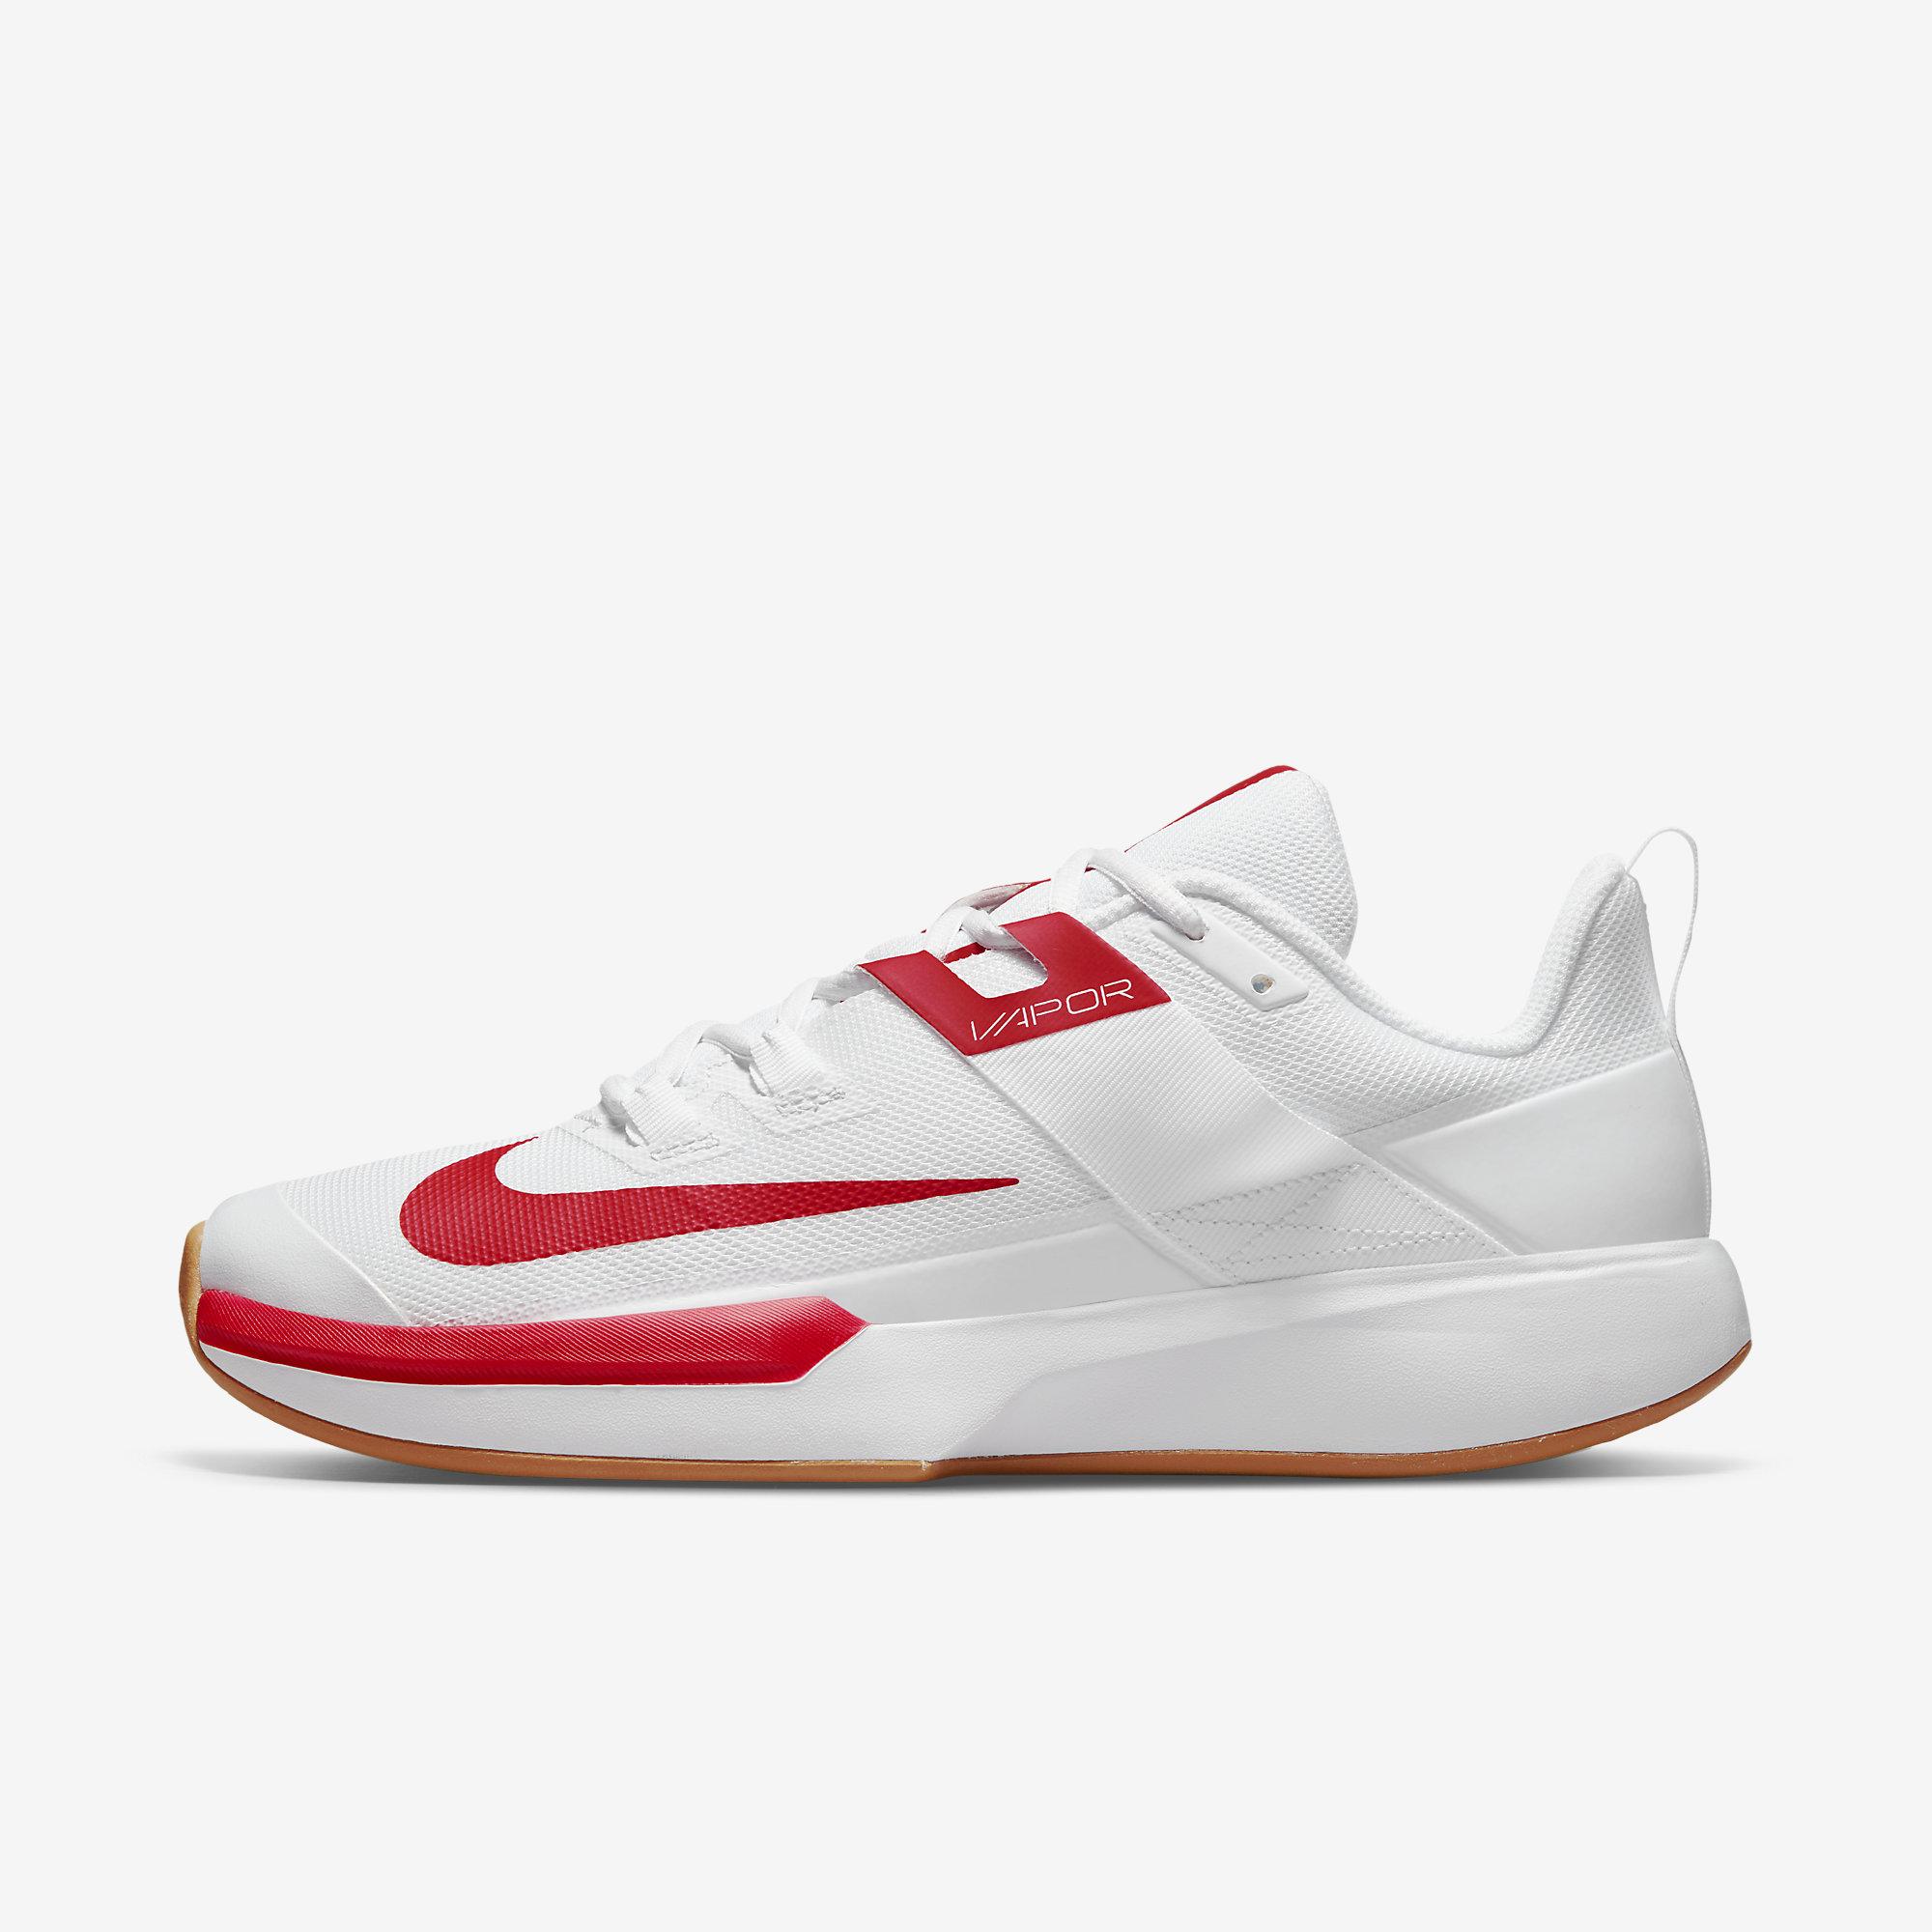 Nike Mens Vapor Lite Tennis Shoes - White/University Red - Tennisnuts.com